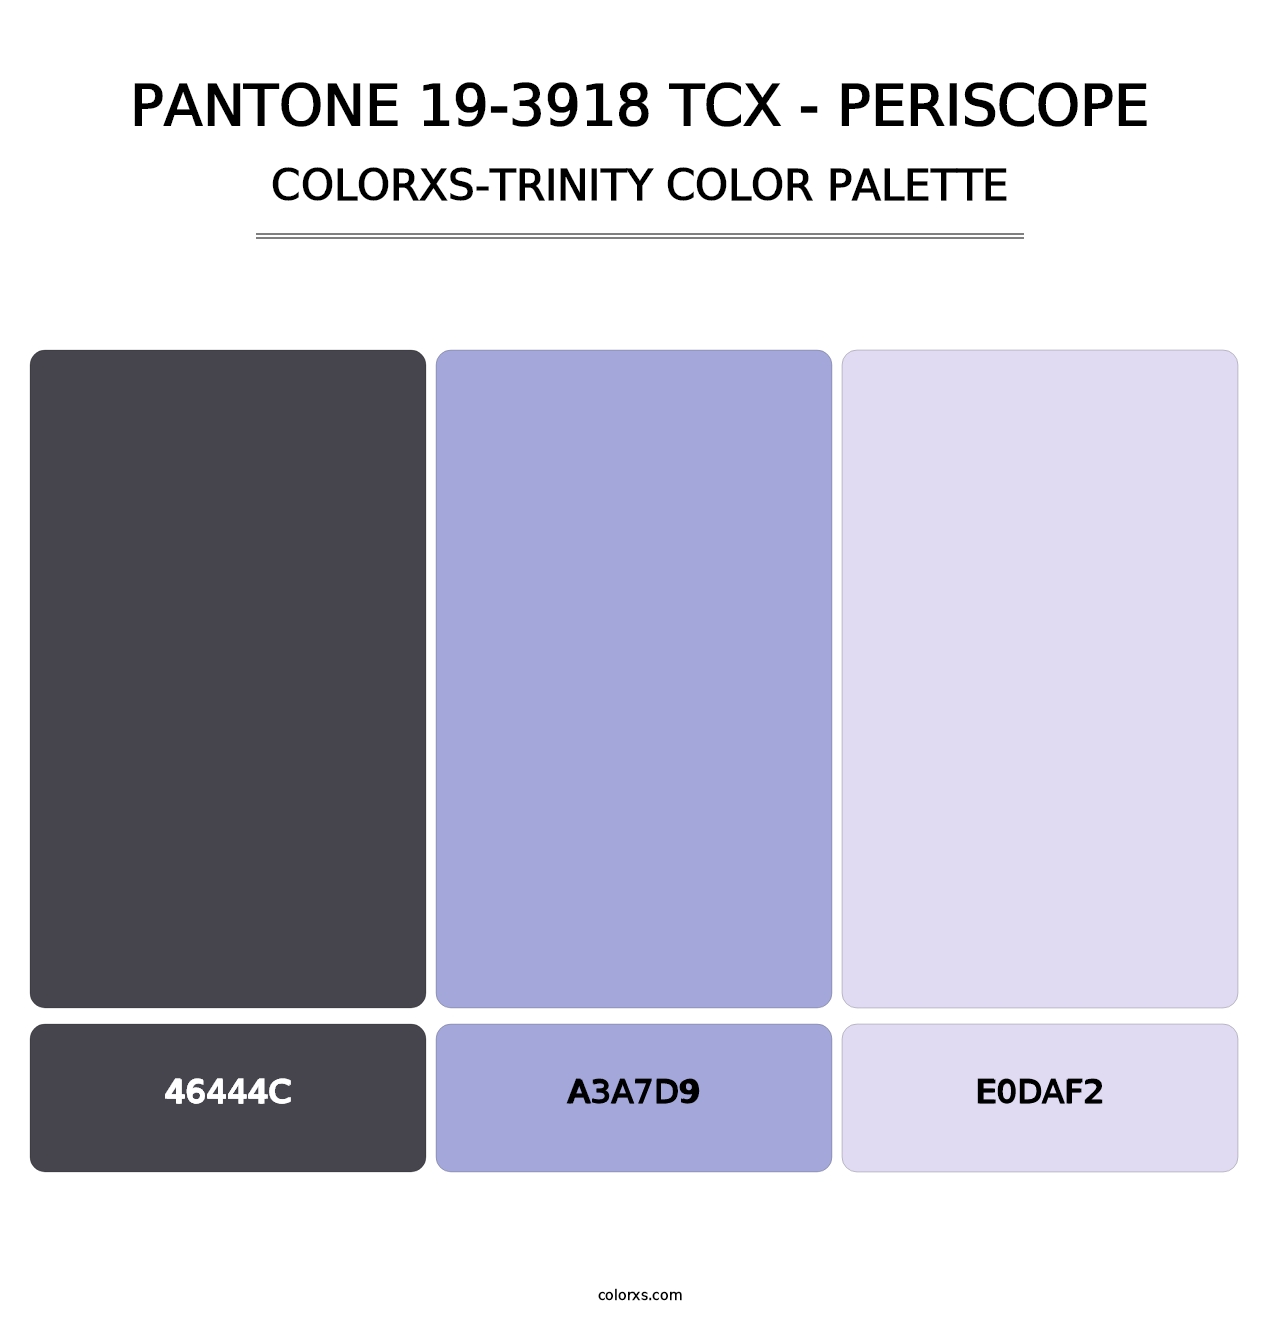 PANTONE 19-3918 TCX - Periscope - Colorxs Trinity Palette